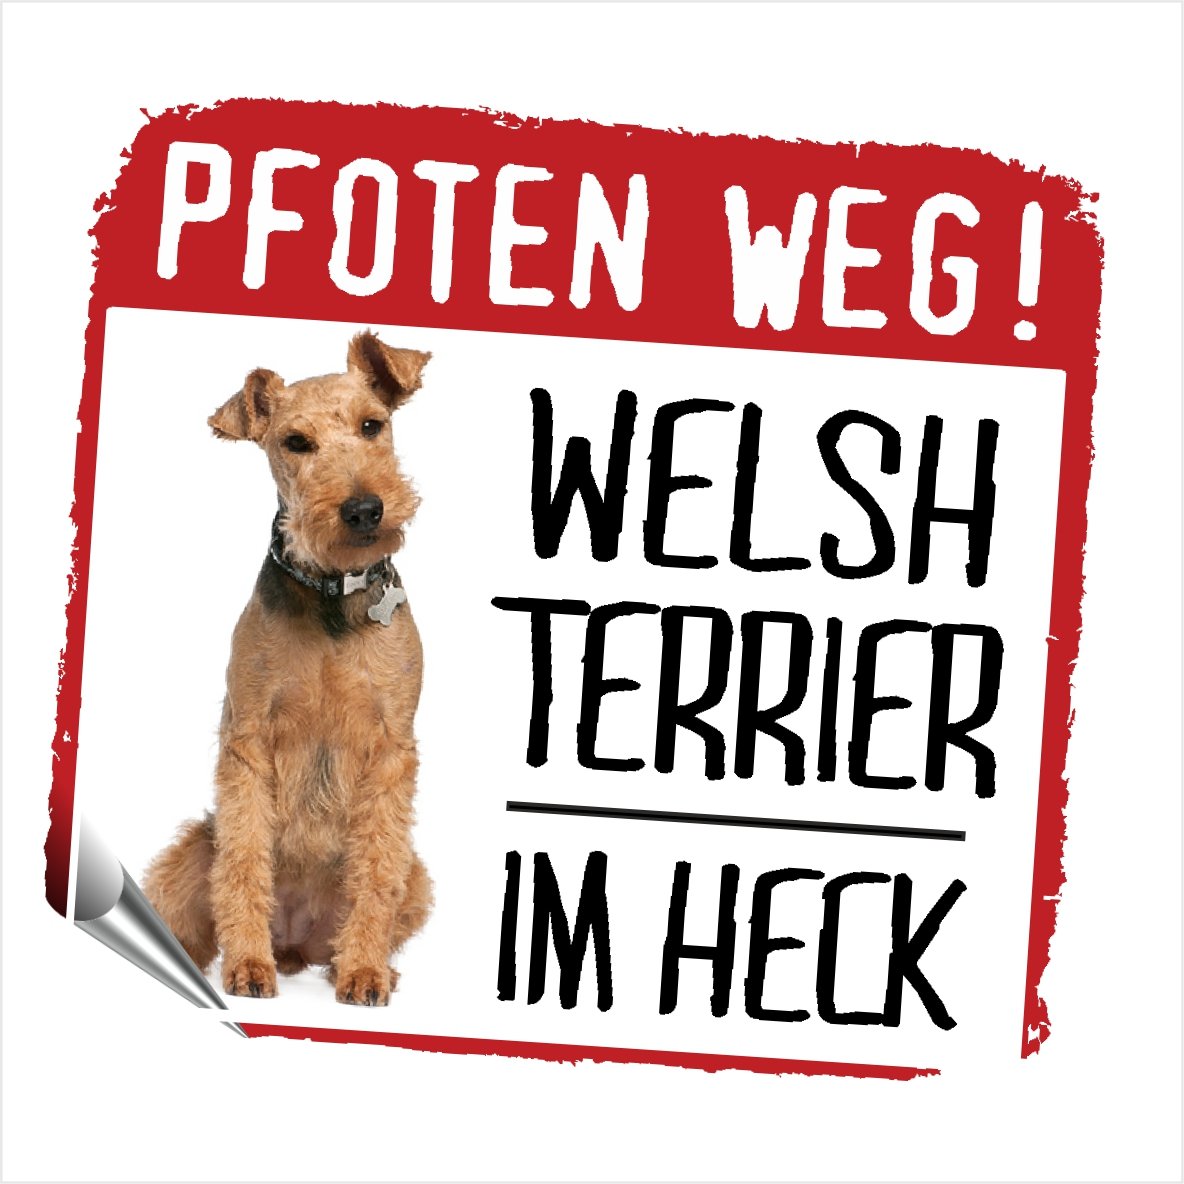 siviwonder Auto Aufkleber Welsh Terrier Pfoten Weg Hundeaufkleber REFLEKTIEREND Reflective von siviwonder